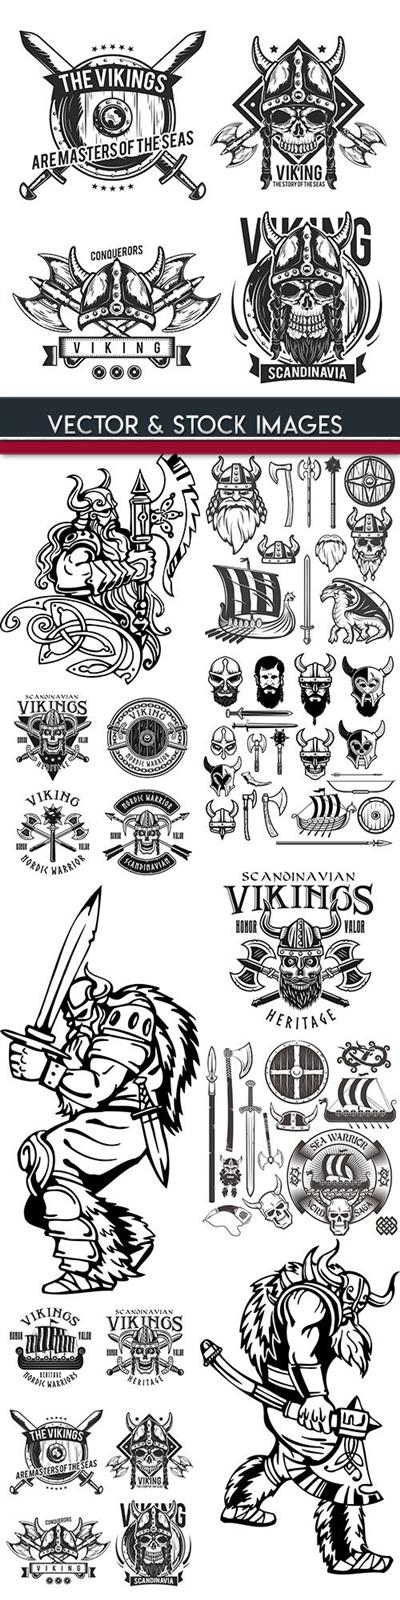 Viking Scandinavian weapon and emblem skull 3